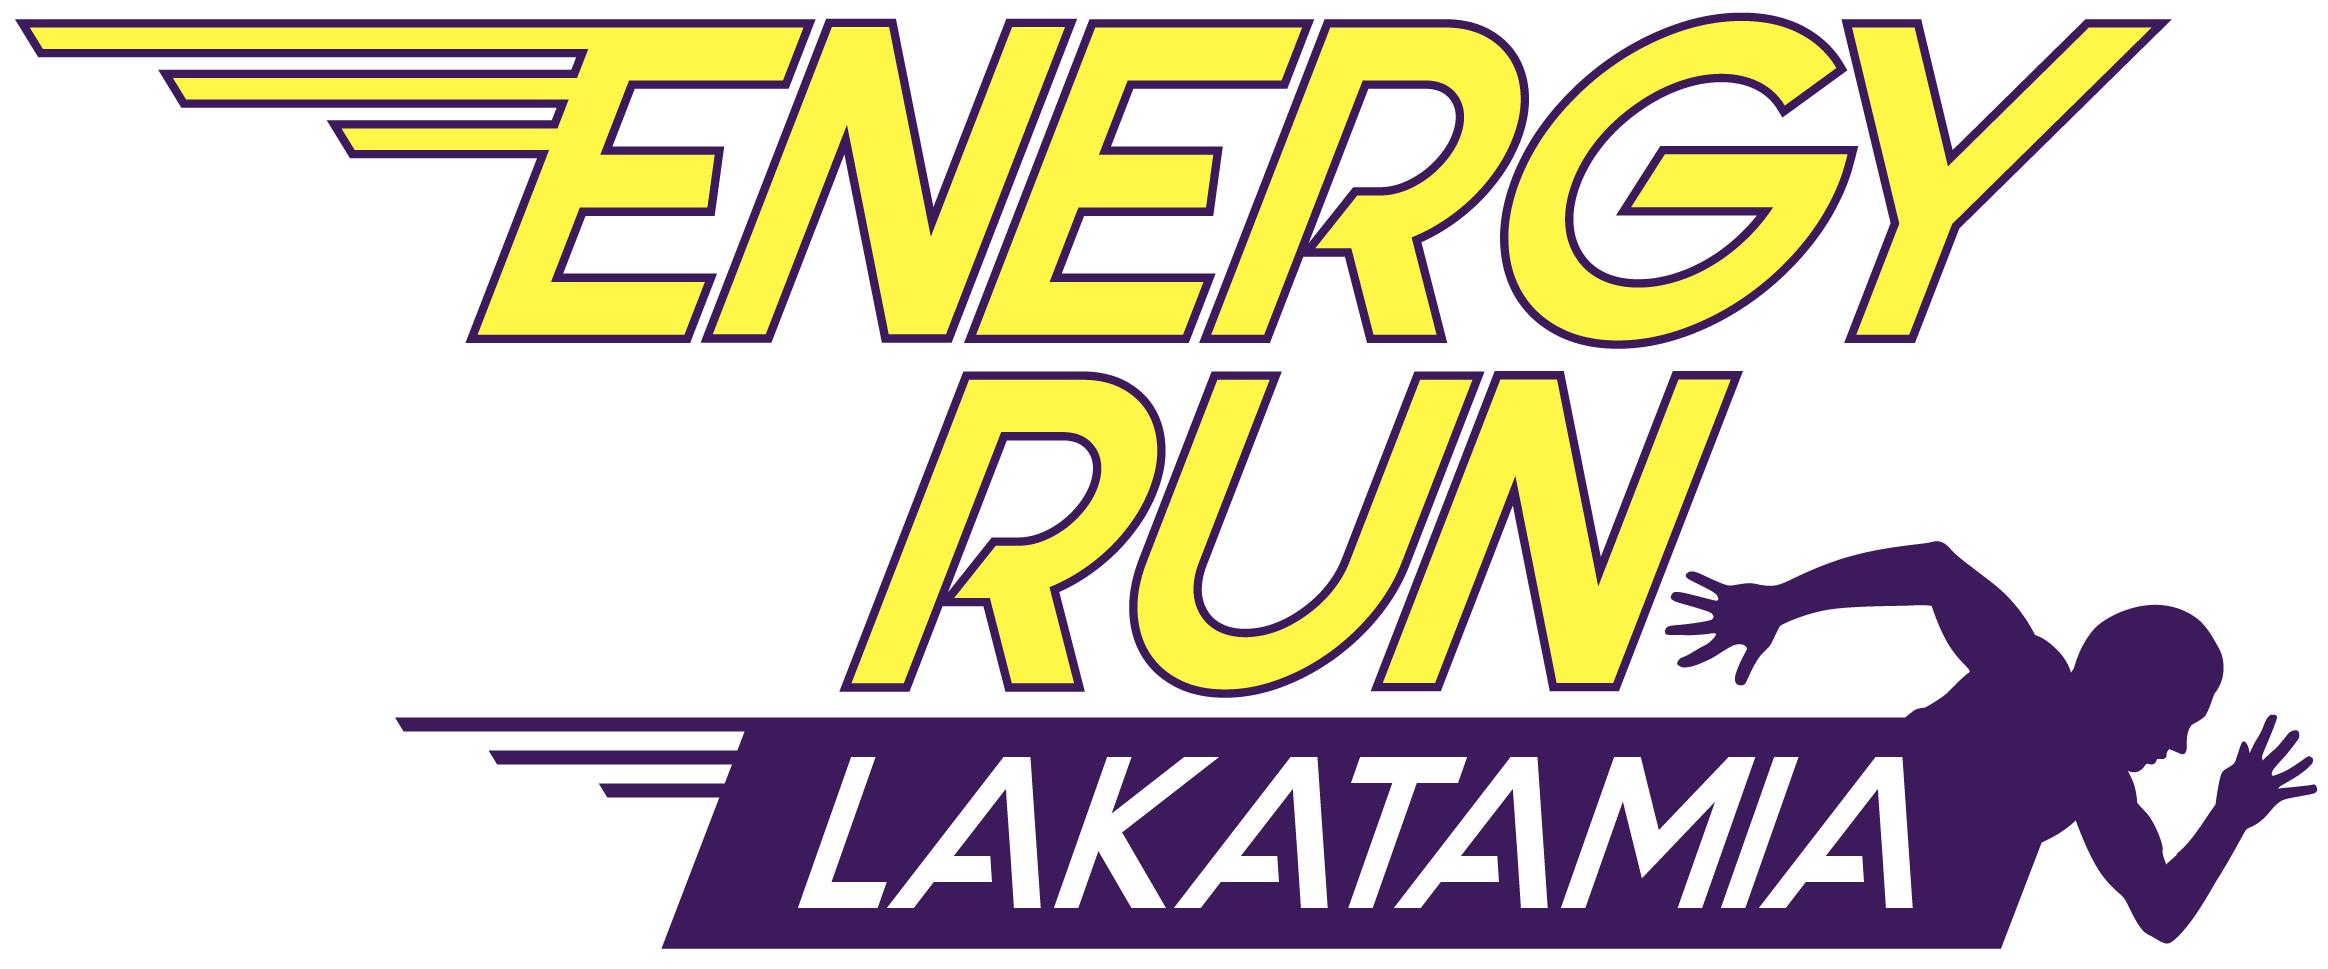 Energy Run